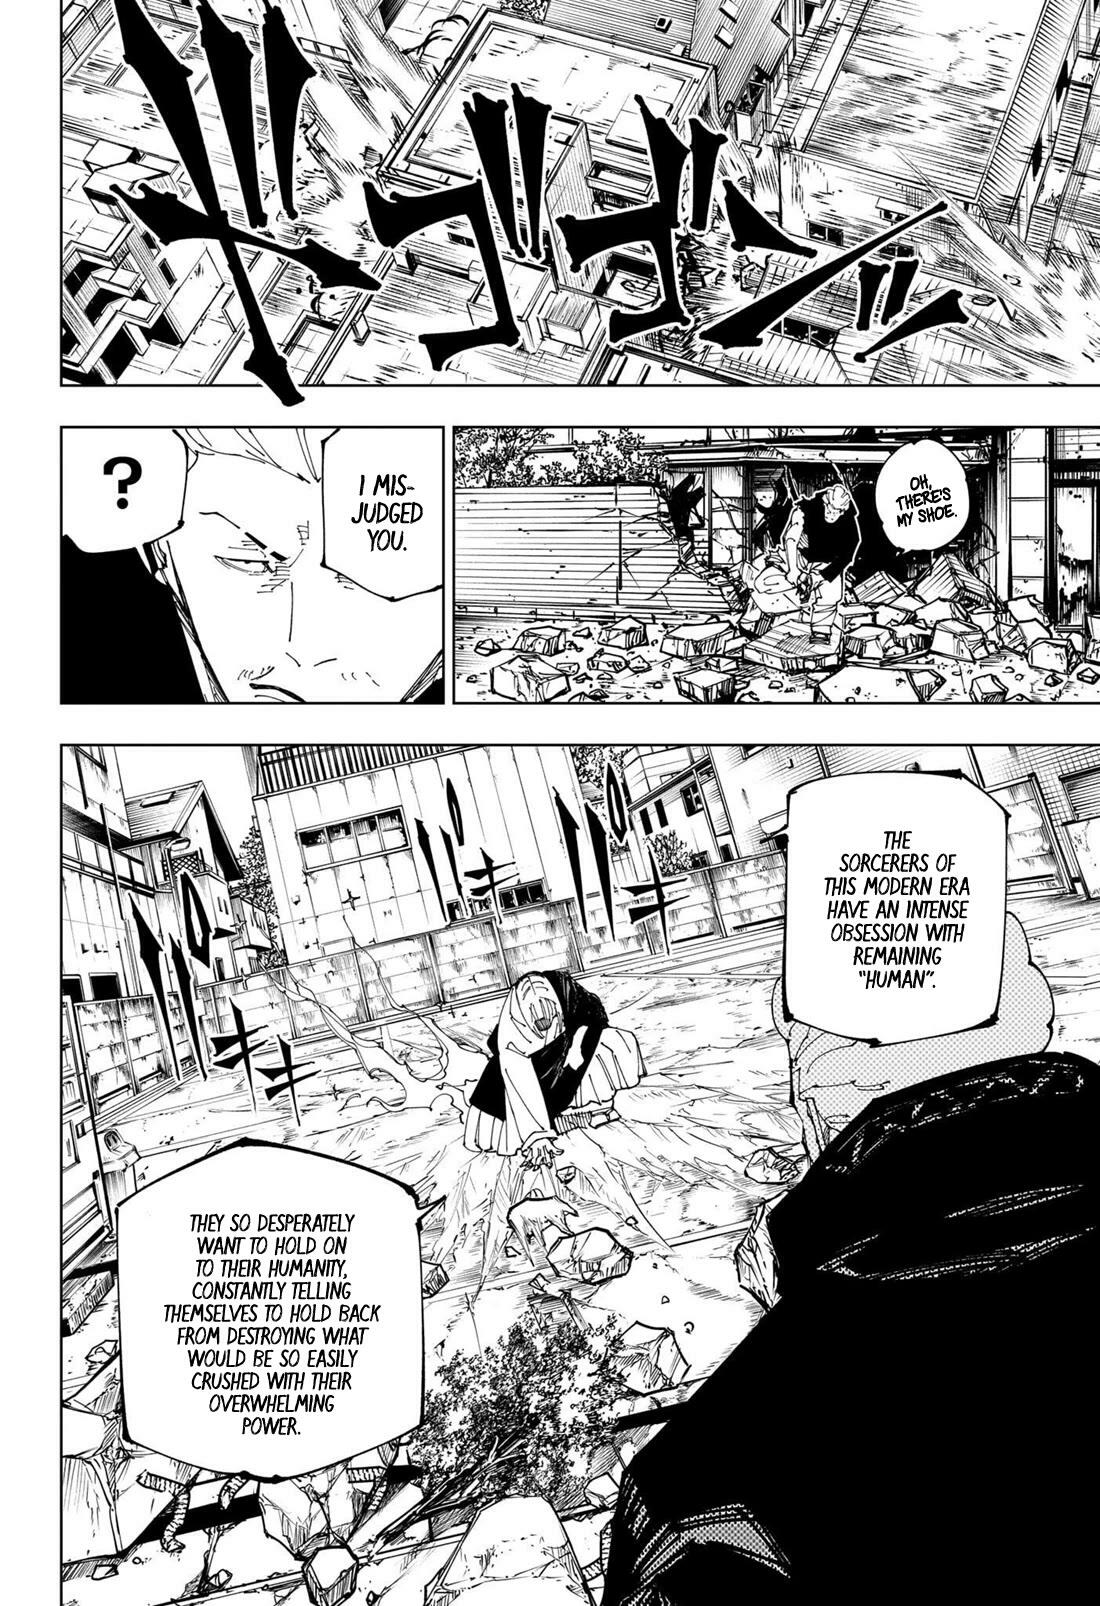 Jujutsu Kaisen Chapter 245: Chapter 245: The Decisive Battle In The Uninhabited, Demon-Infested Shinjuku ⑰ page 9 - Mangakakalot